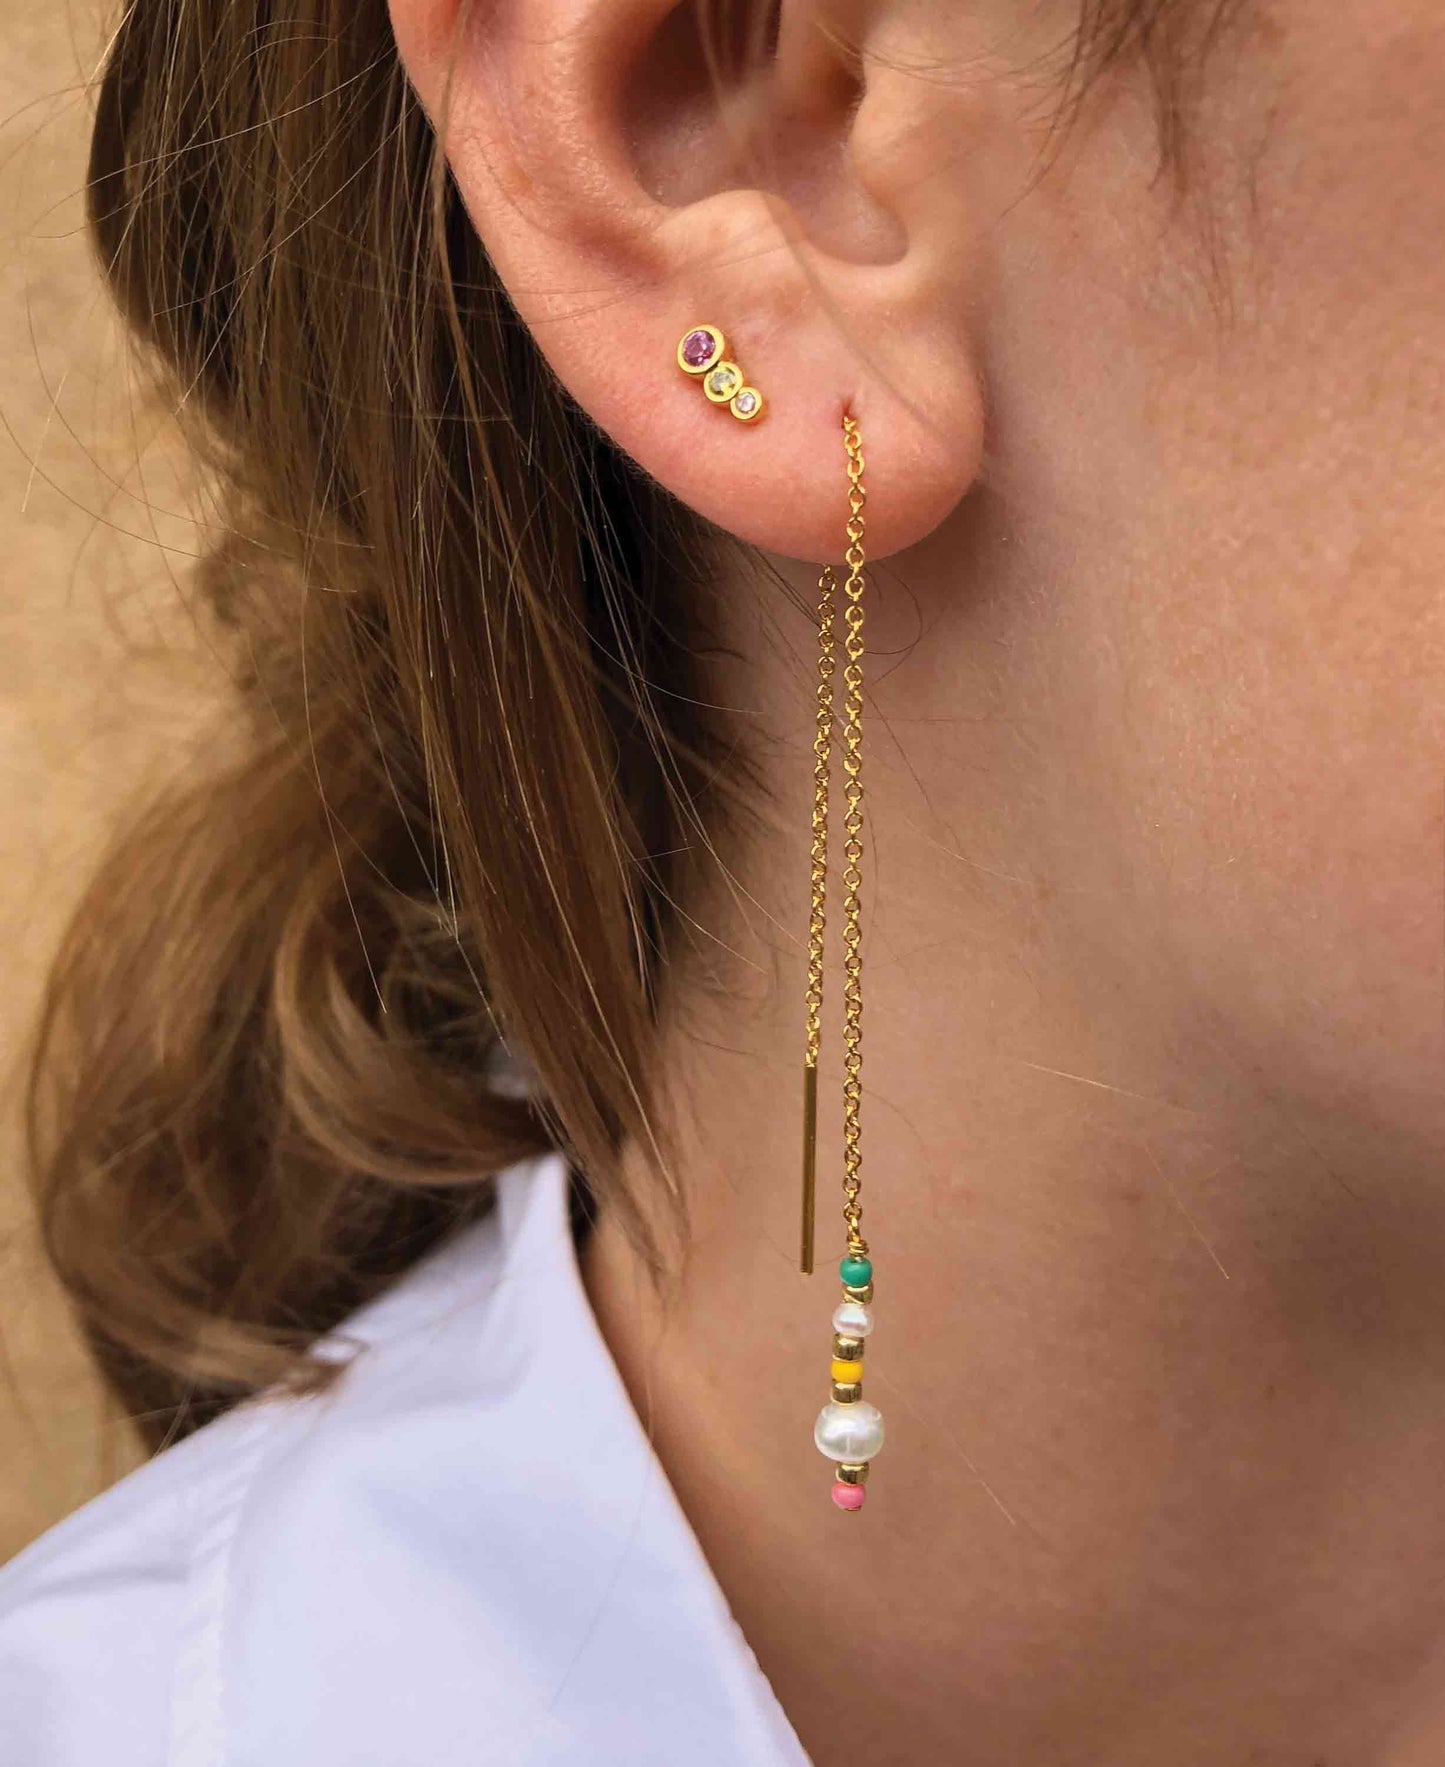 Aurora chain earrings